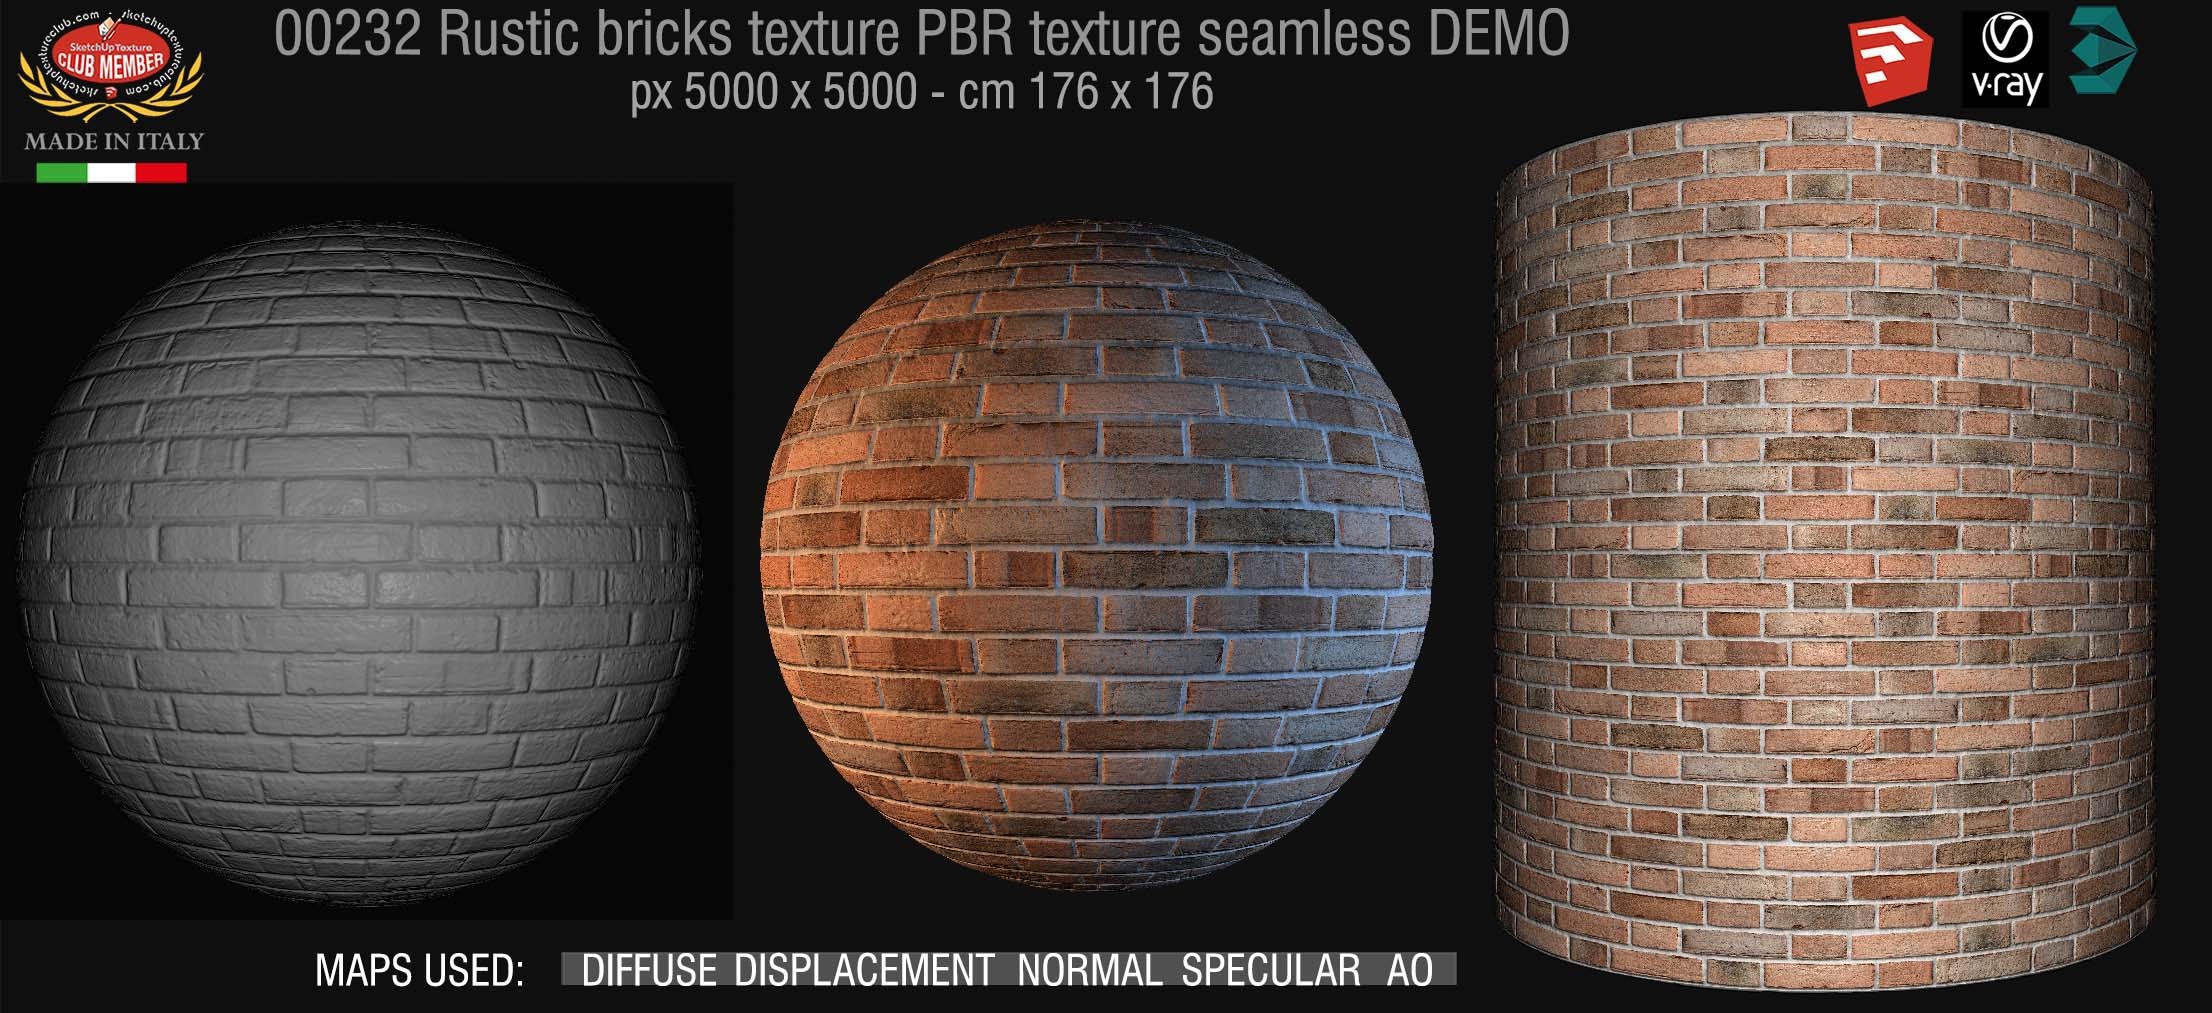 00232 Rustic bricks PBR texture seamless DEMO